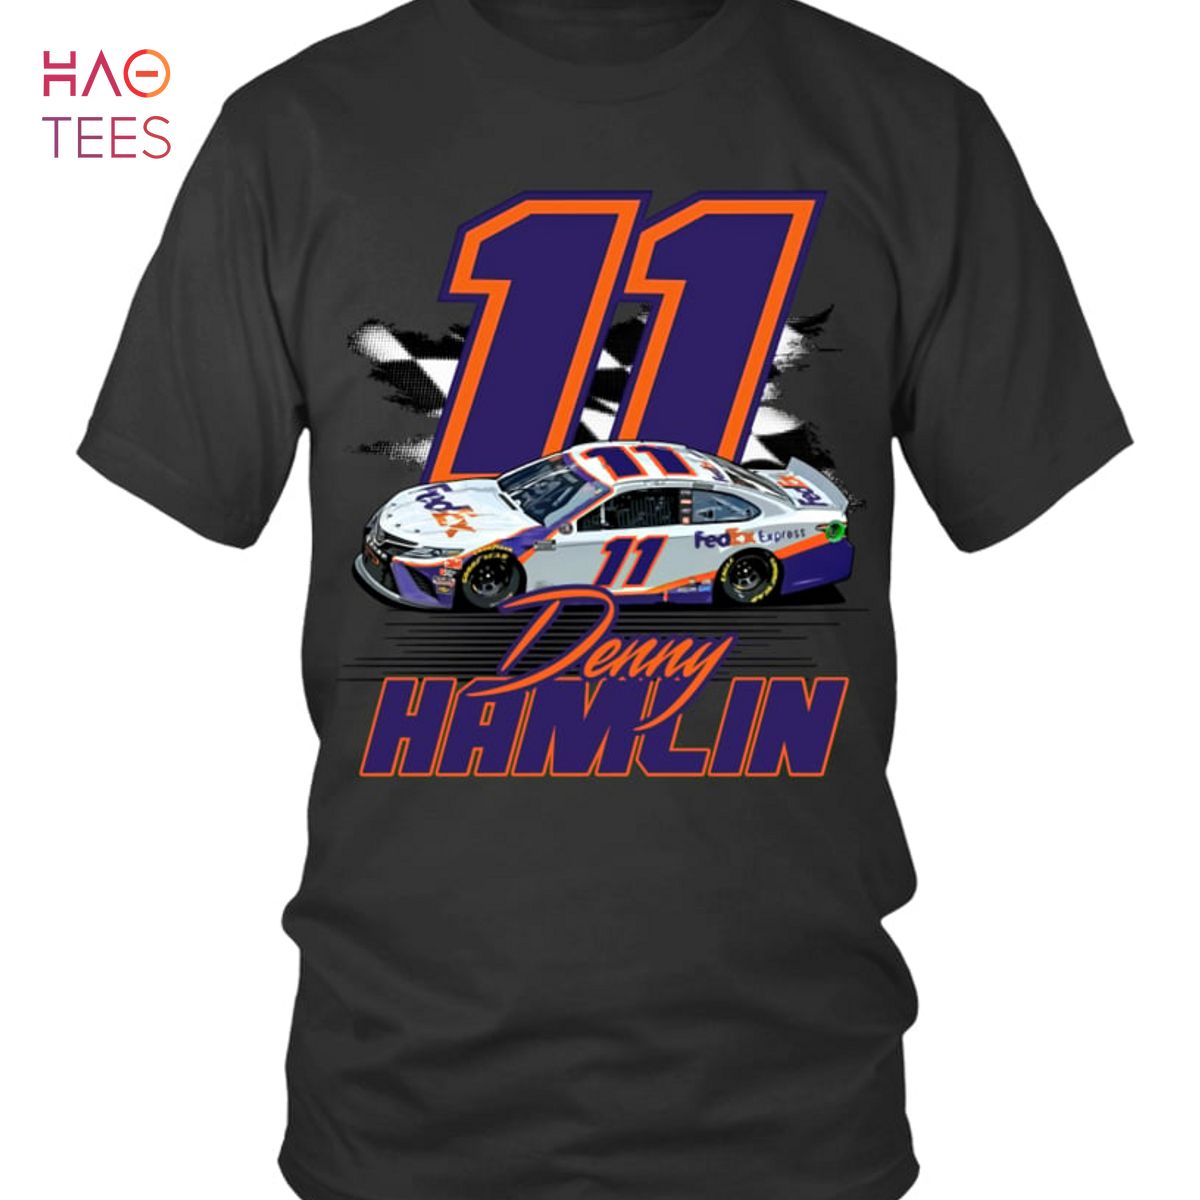 11 Denny Hamlin Car Shirt Limited Edition